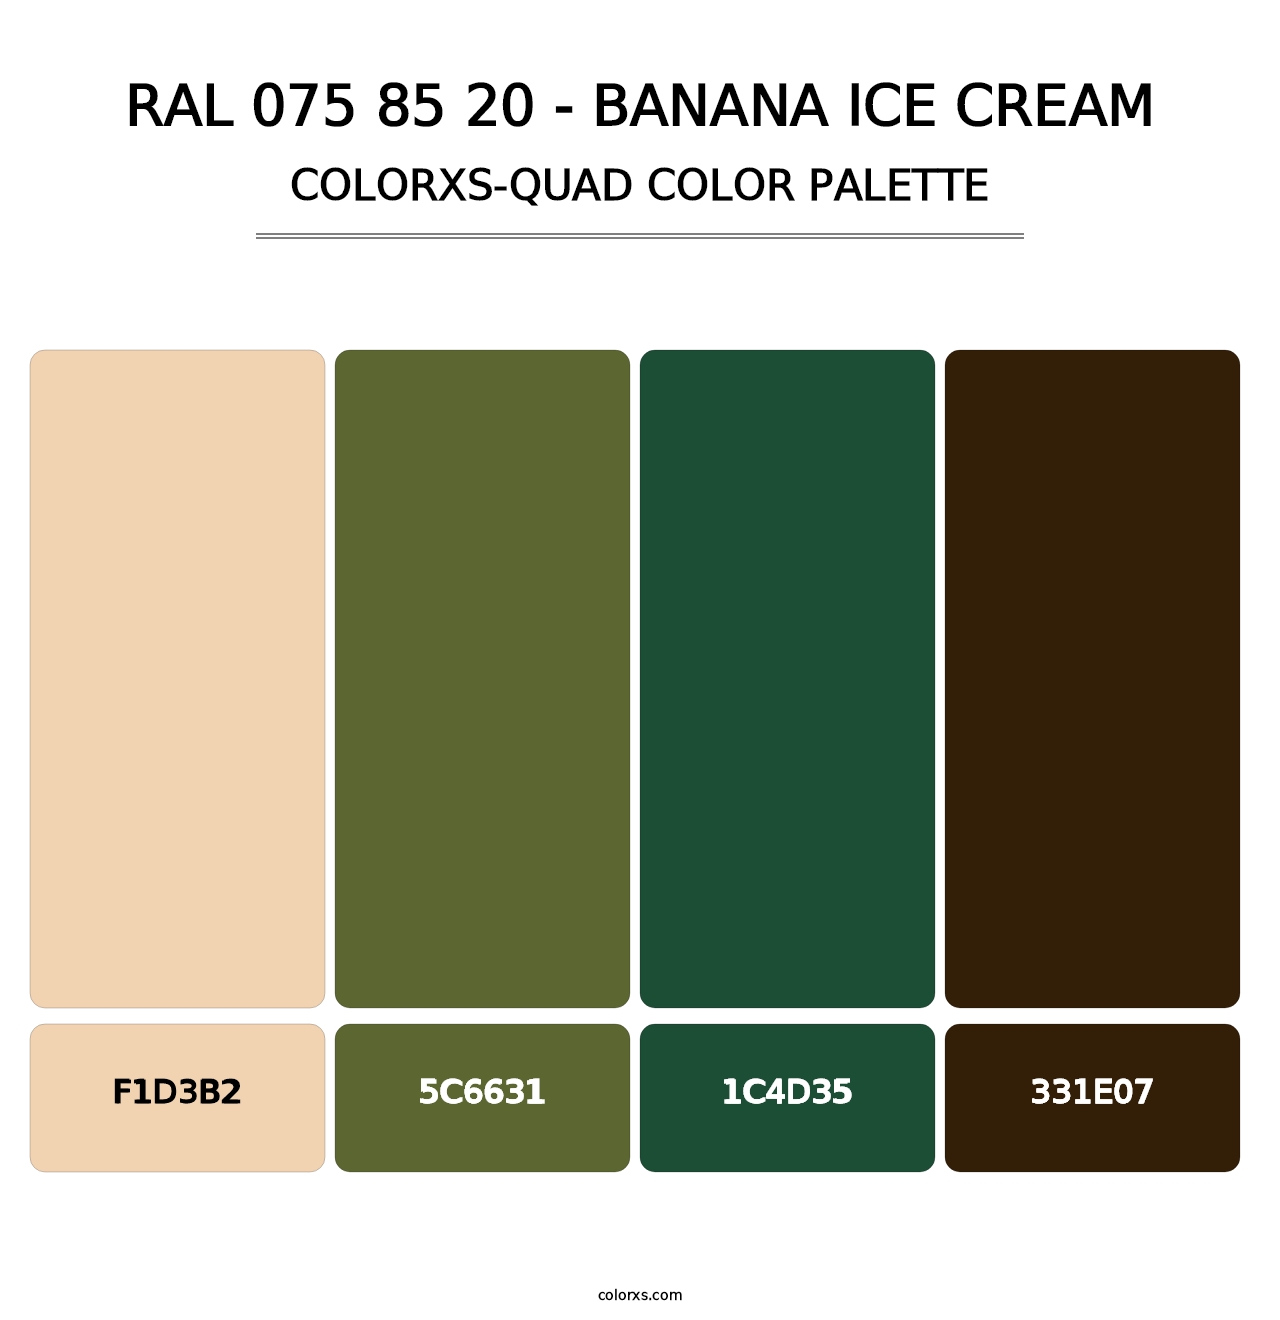 RAL 075 85 20 - Banana Ice Cream - Colorxs Quad Palette